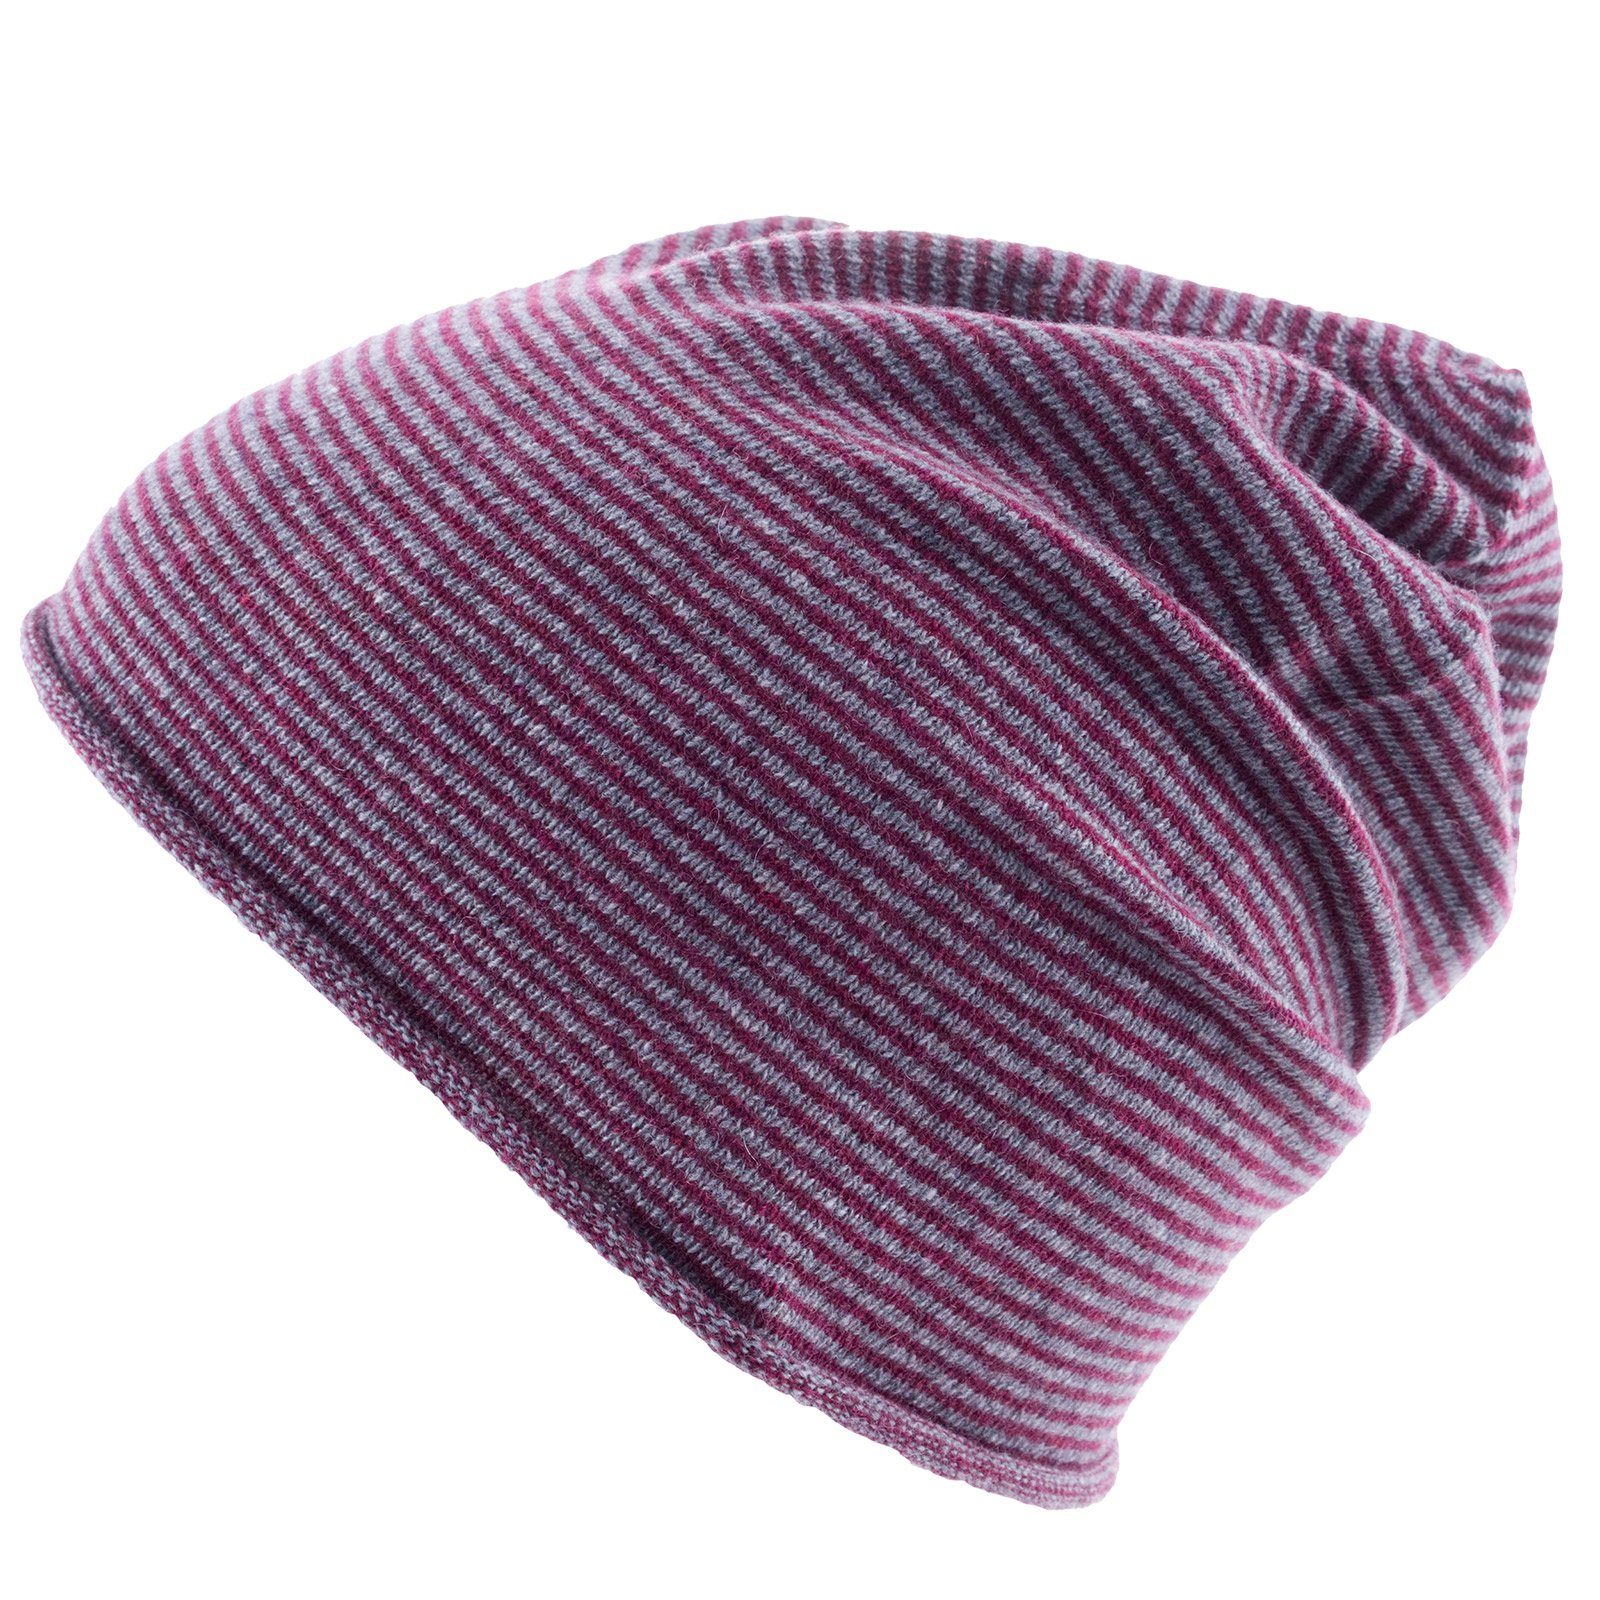 Really Nice Cashmere Beanie Curl Stripes Strickmütze Beanie Unisex 100 % Kaschmir Mütze violett/grau